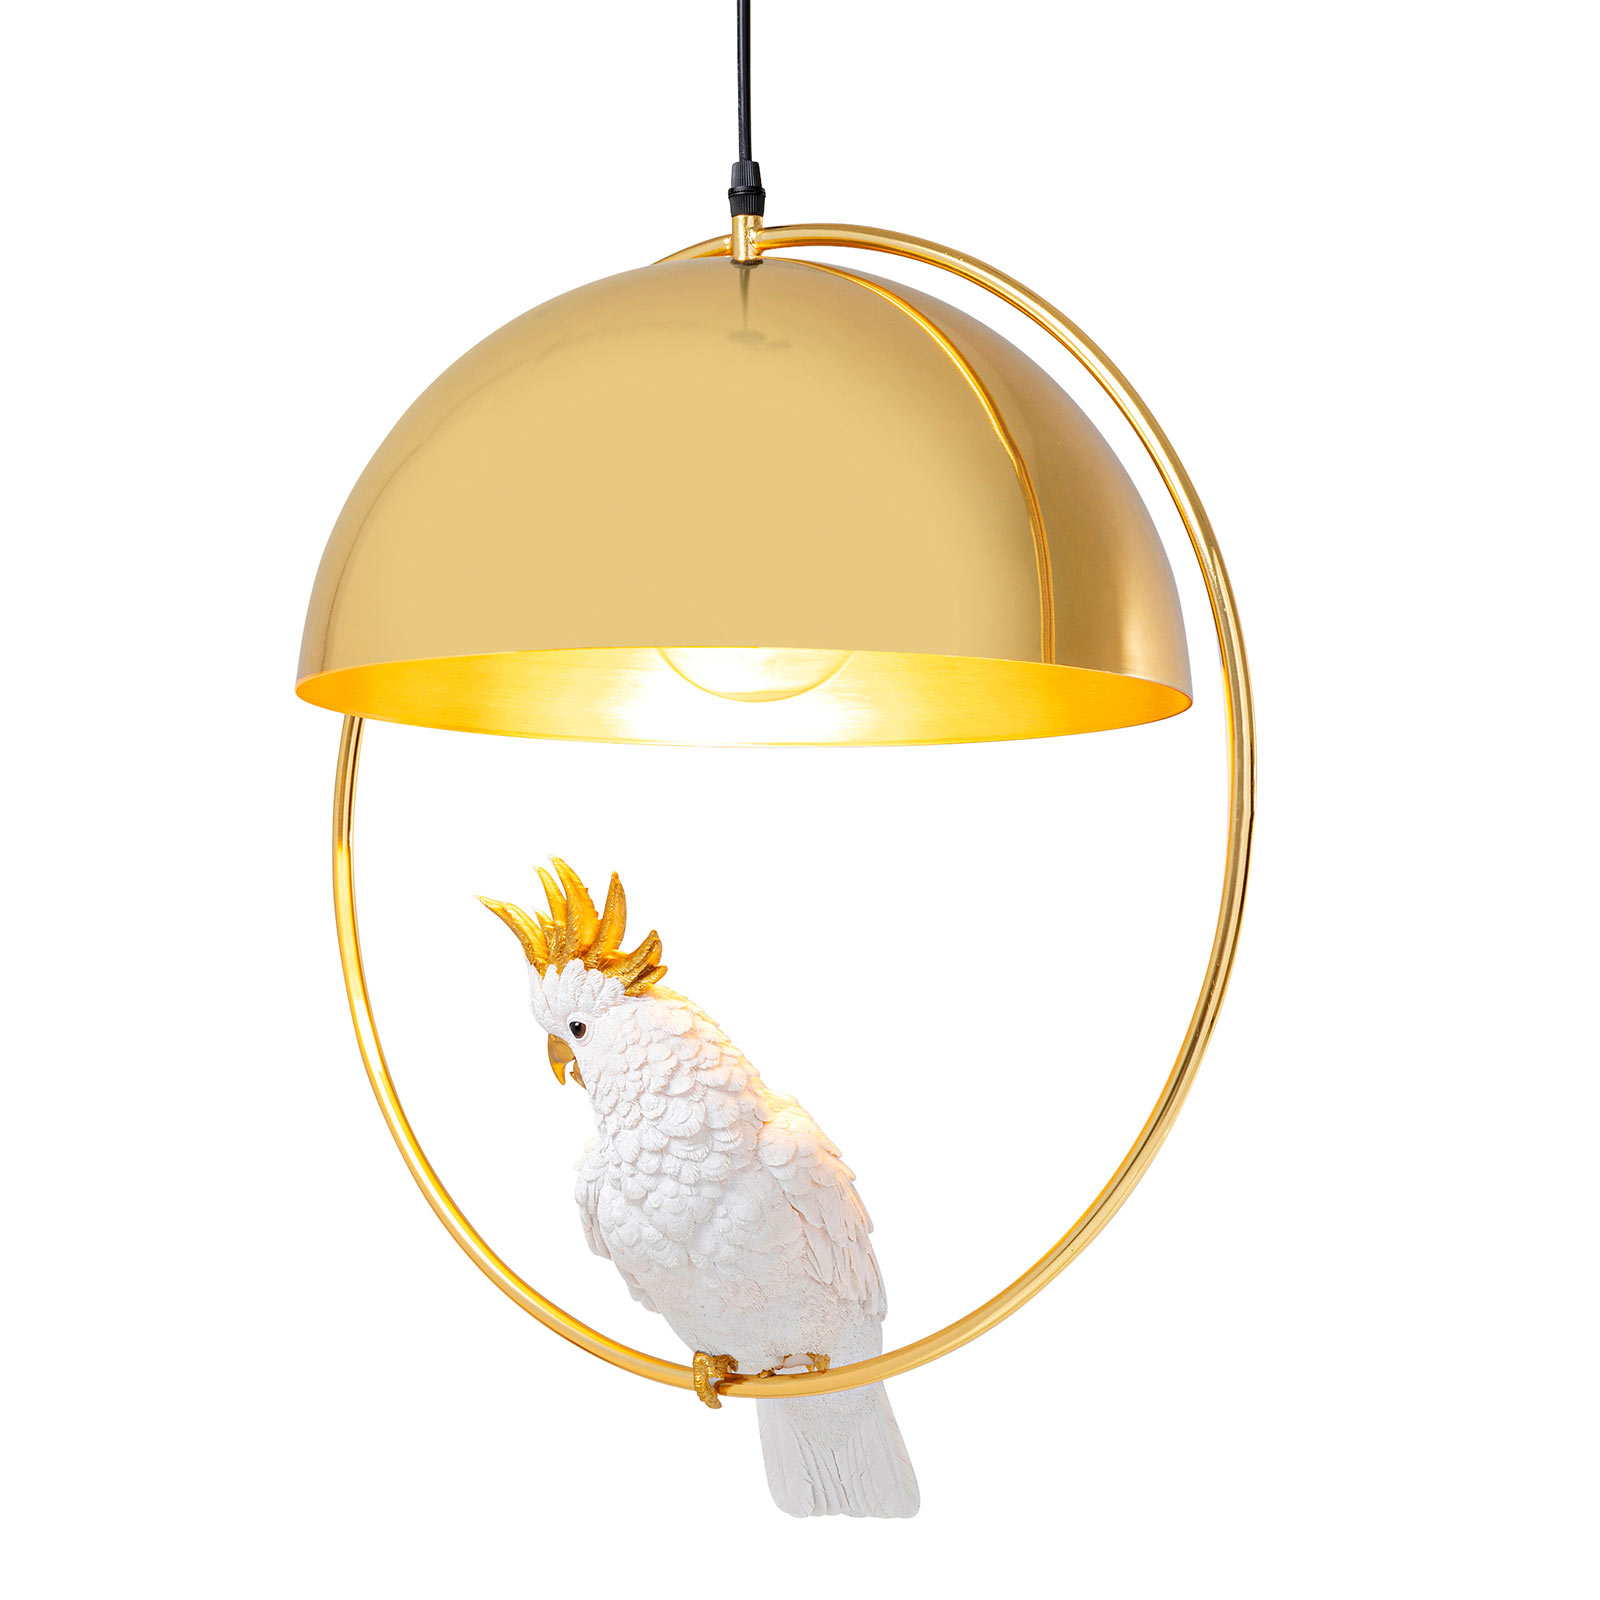 KARE Cockatoo pendant light with cockatoo model